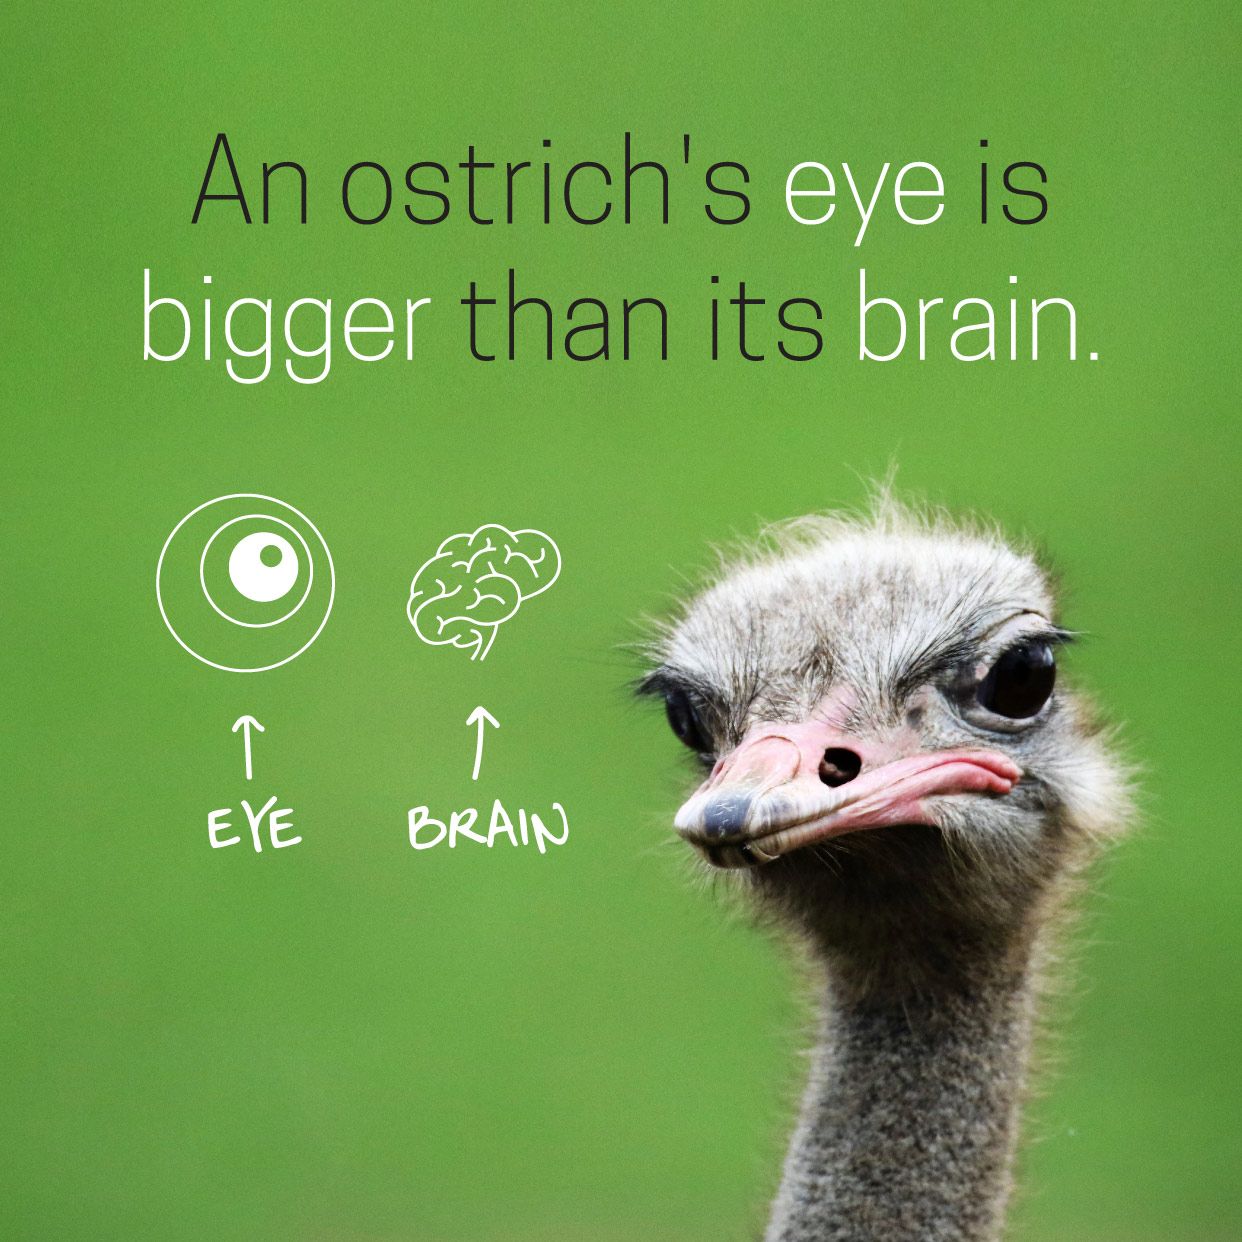 Is it true that an ostrich's eye bigger than brain?